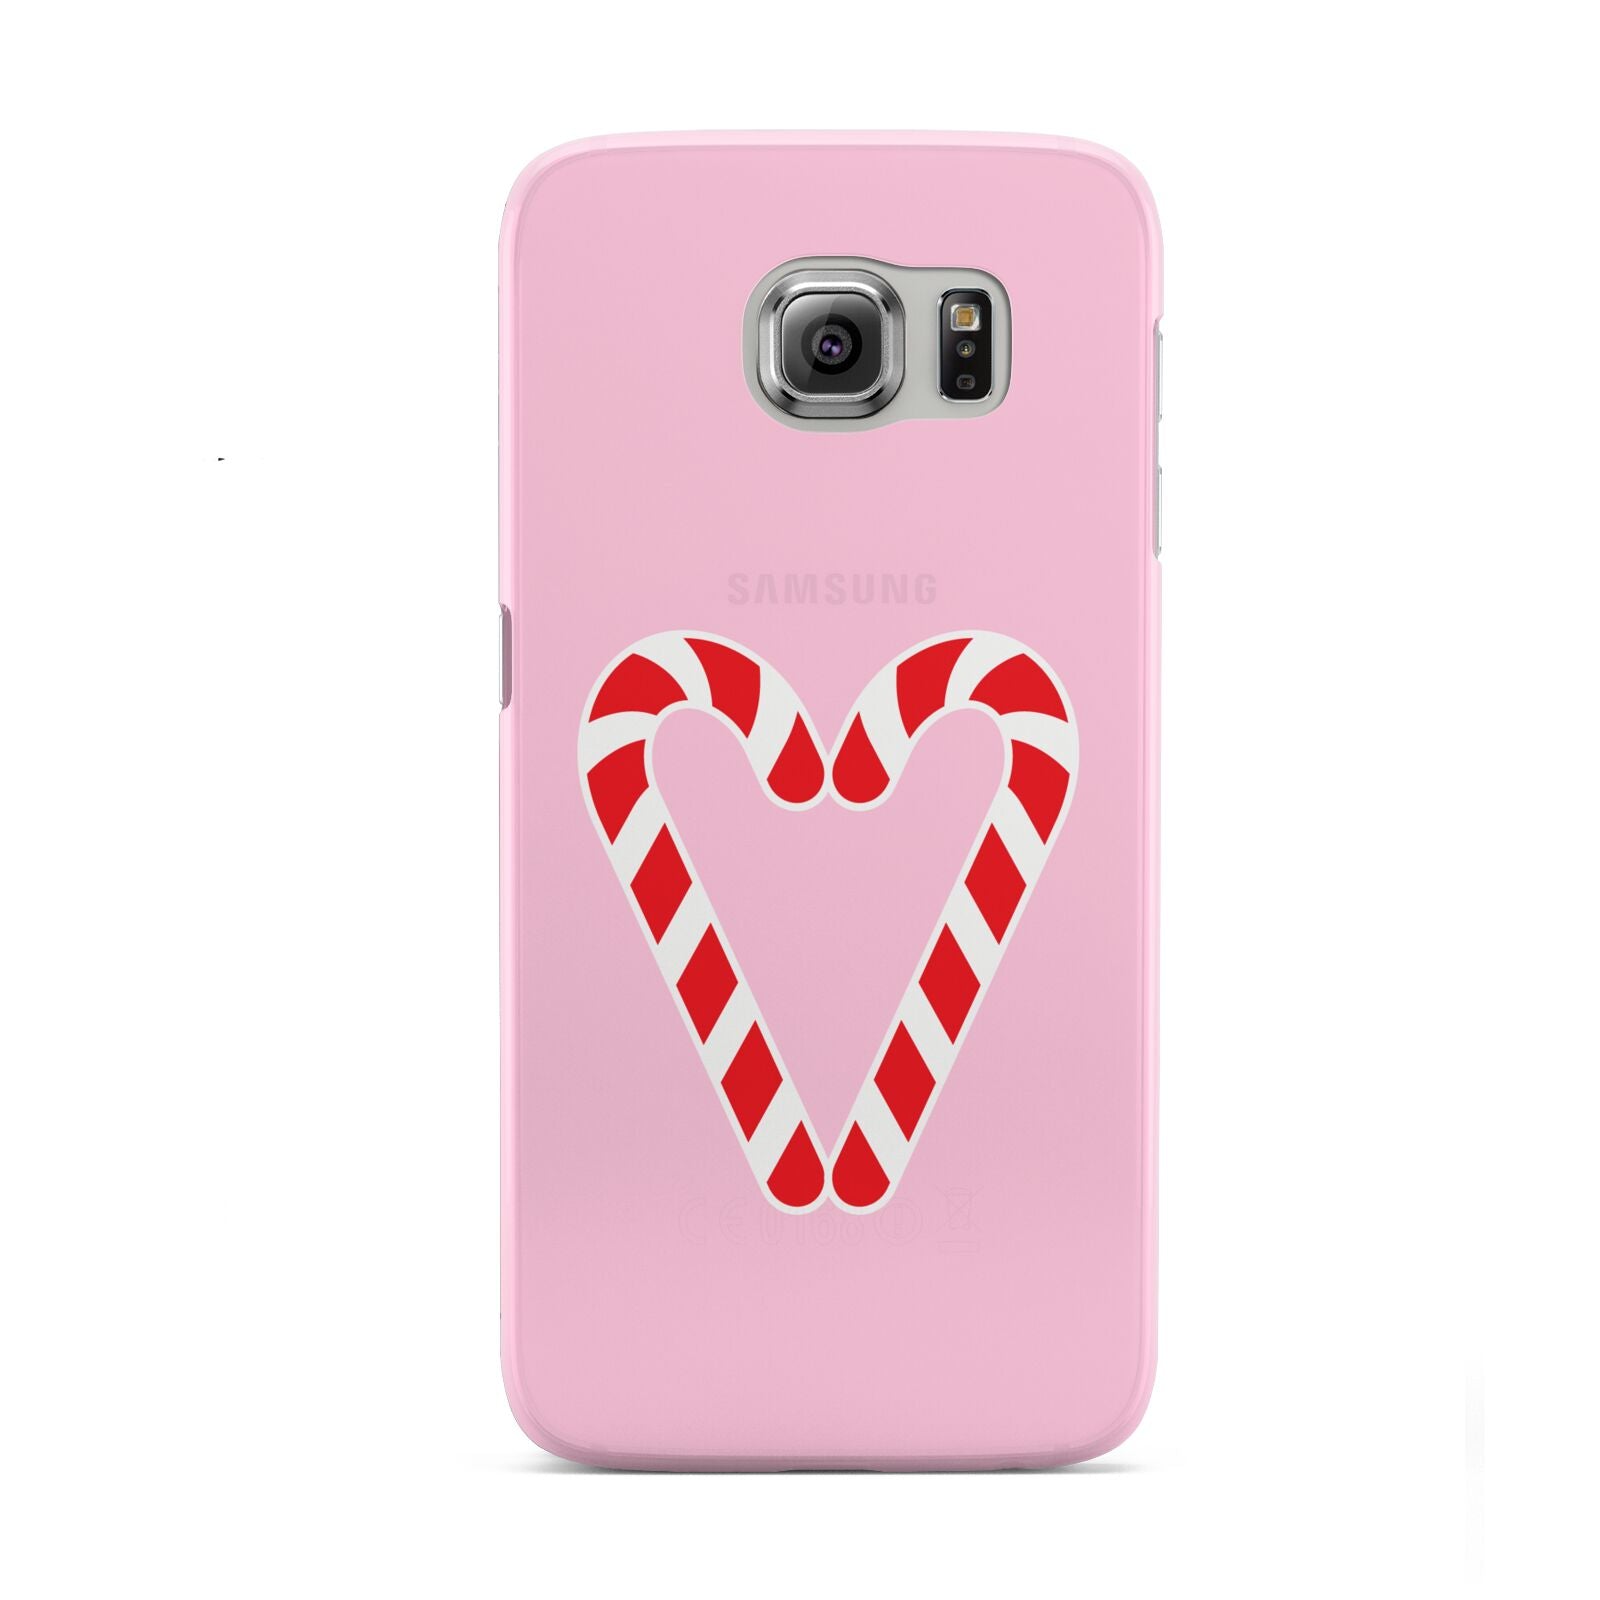 Candy Cane Heart Samsung Galaxy S6 Case